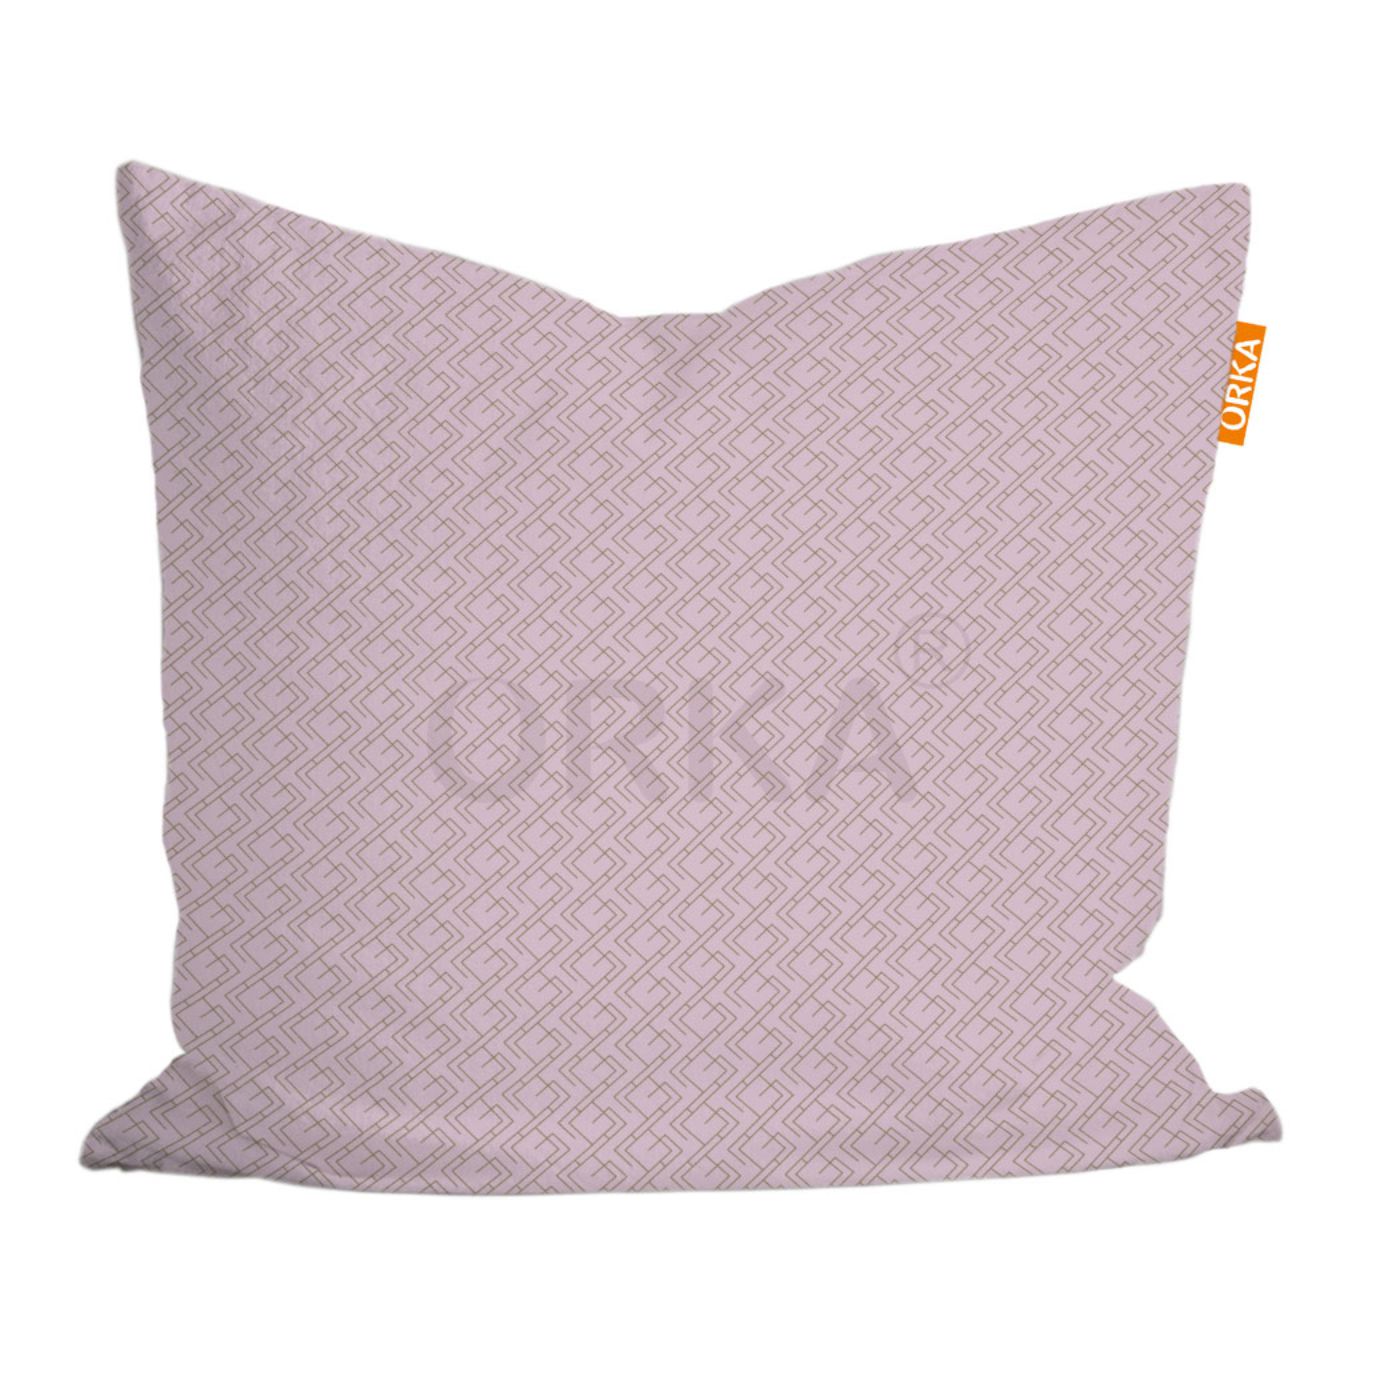 ORKA Digital Printed Cushion 5 14"x14" Cover Only